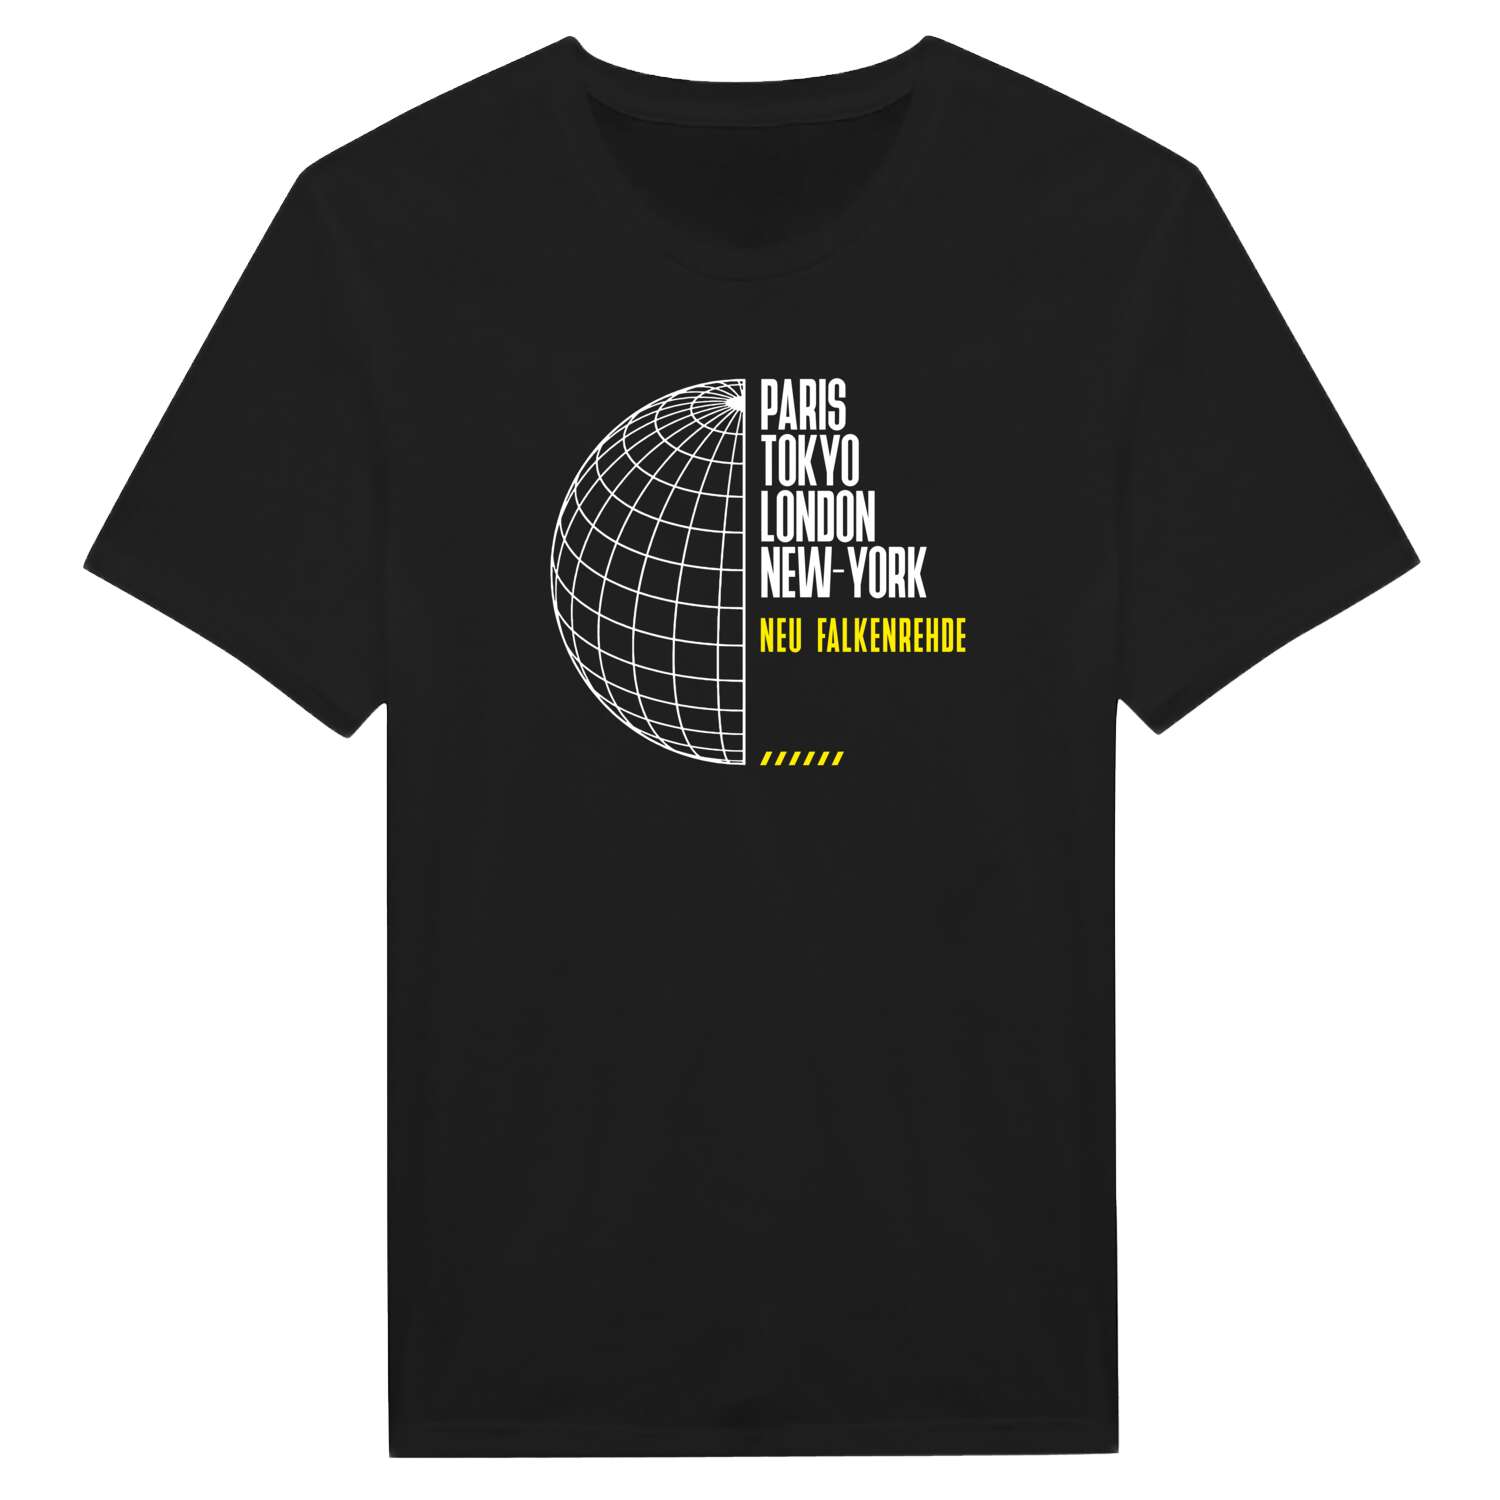 Neu Falkenrehde T-Shirt »Paris Tokyo London«